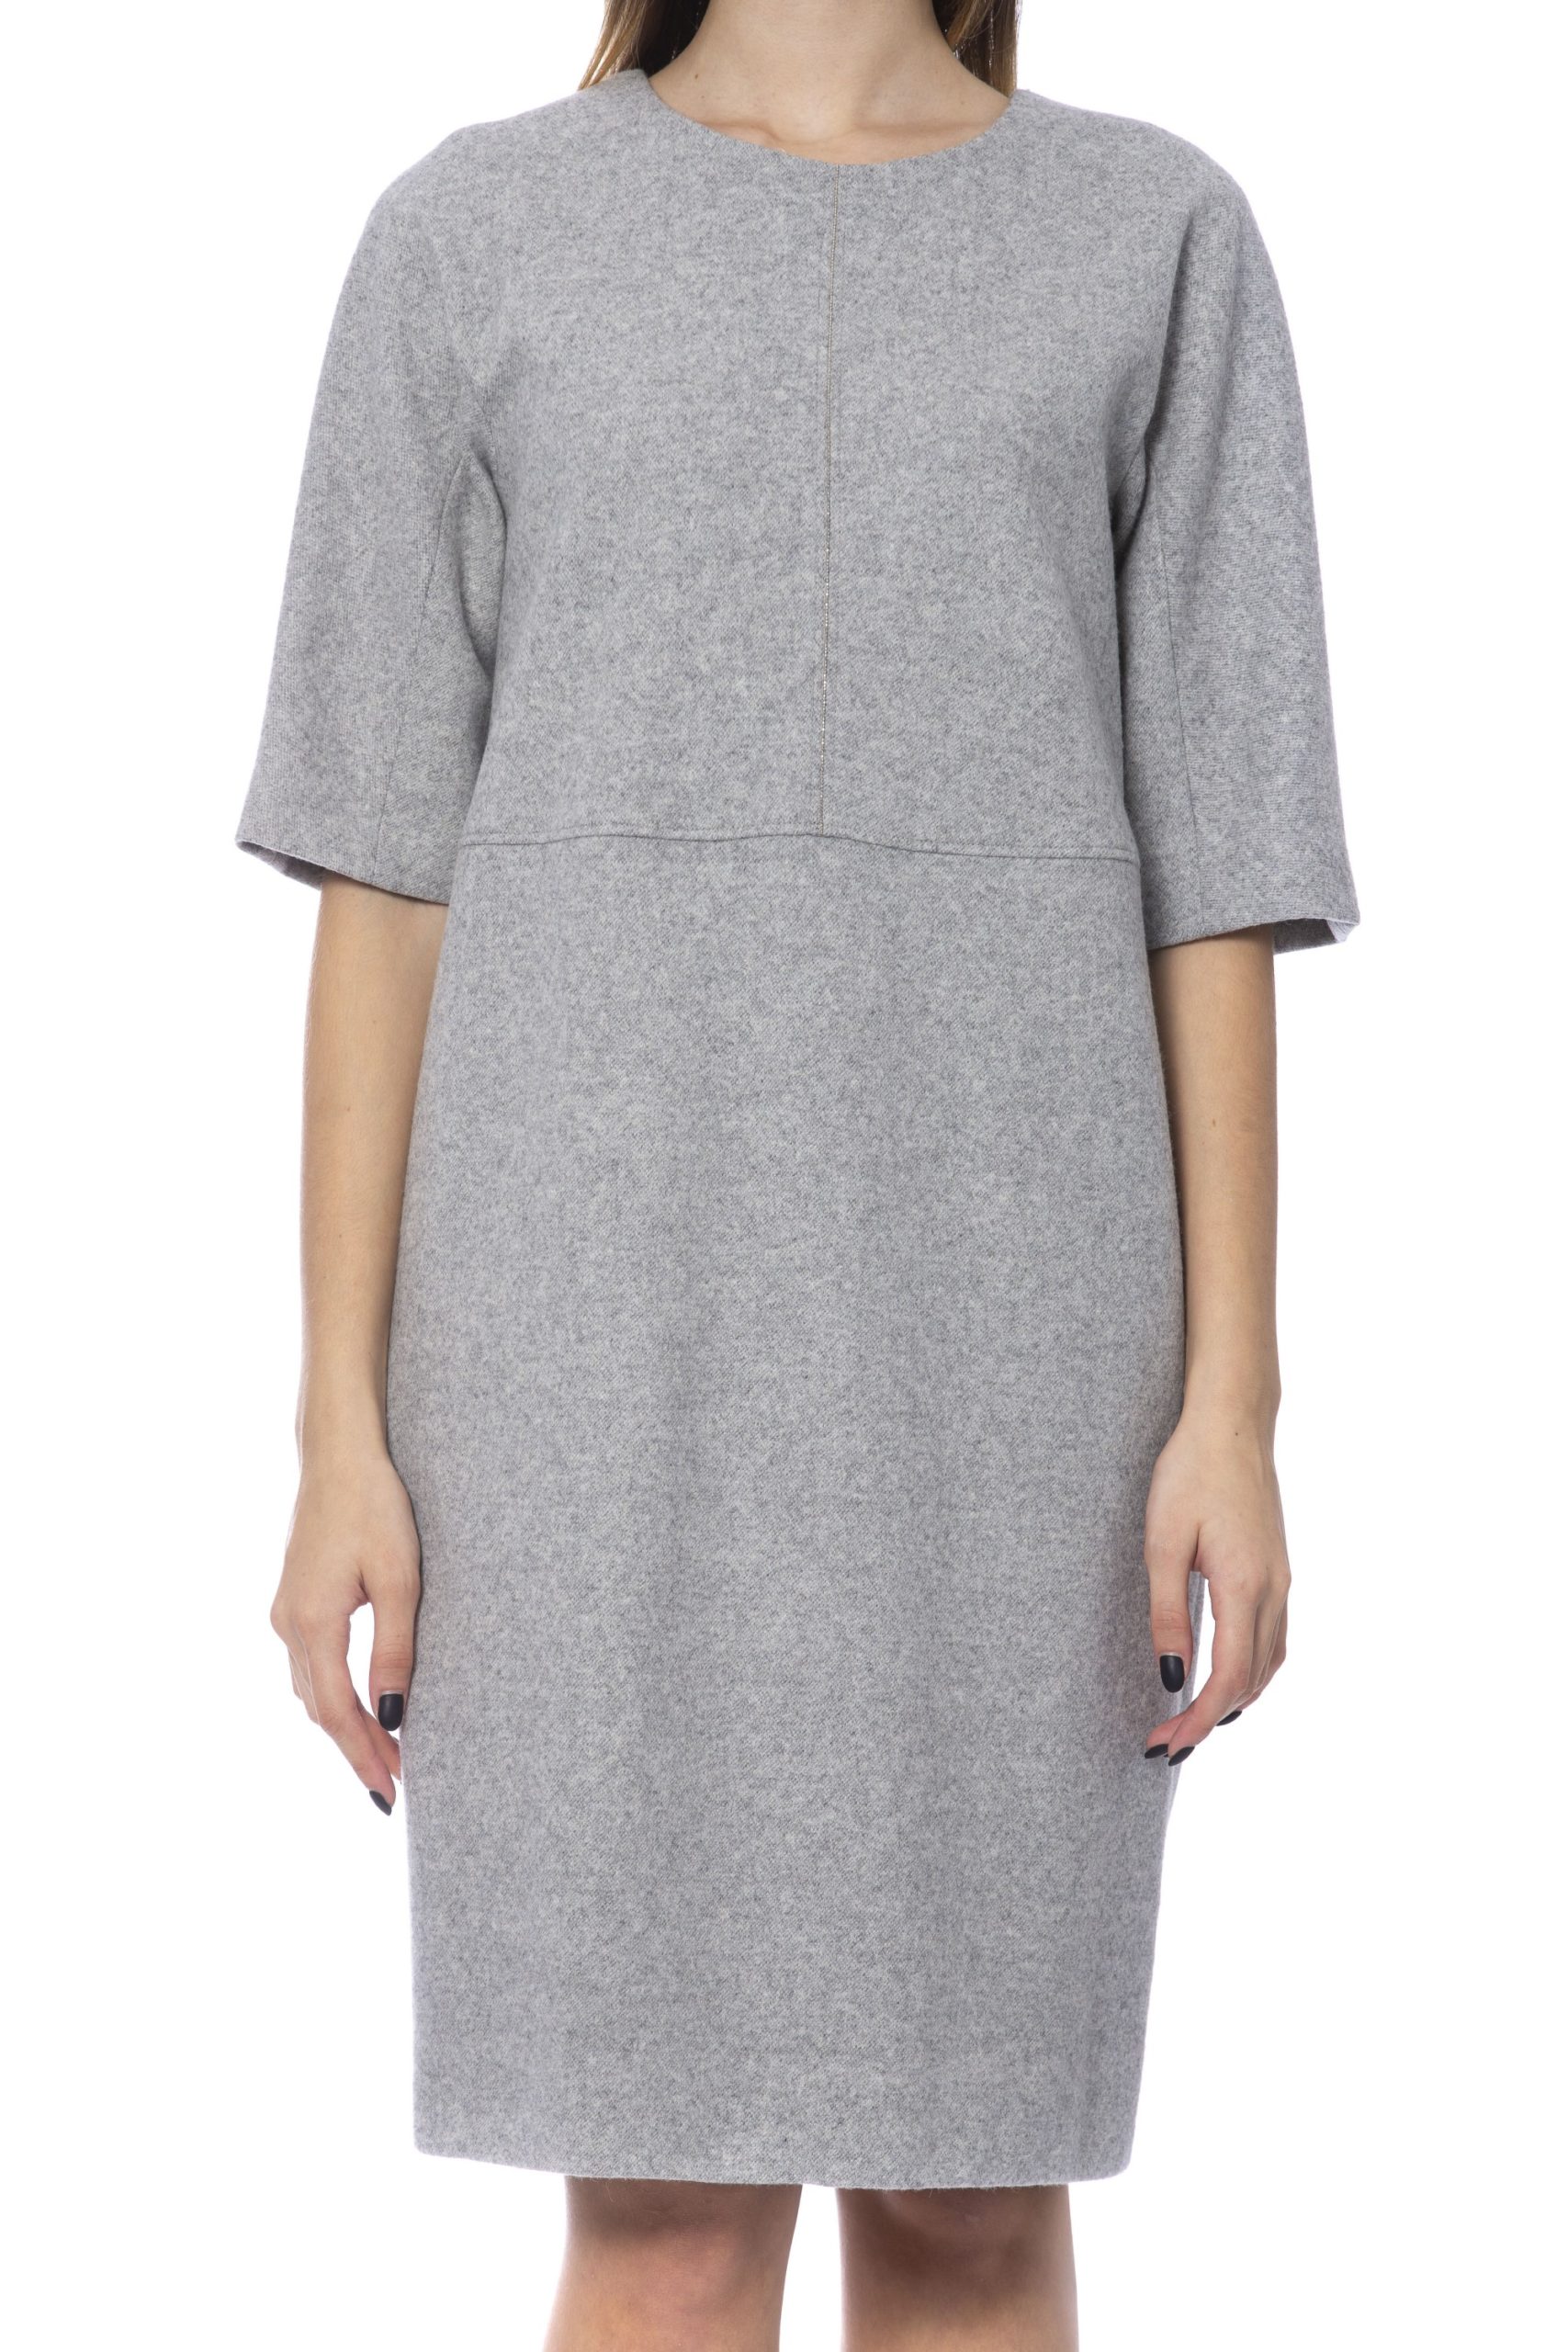 Peserico Women's Dress Grey PE992830 - IT44 | M